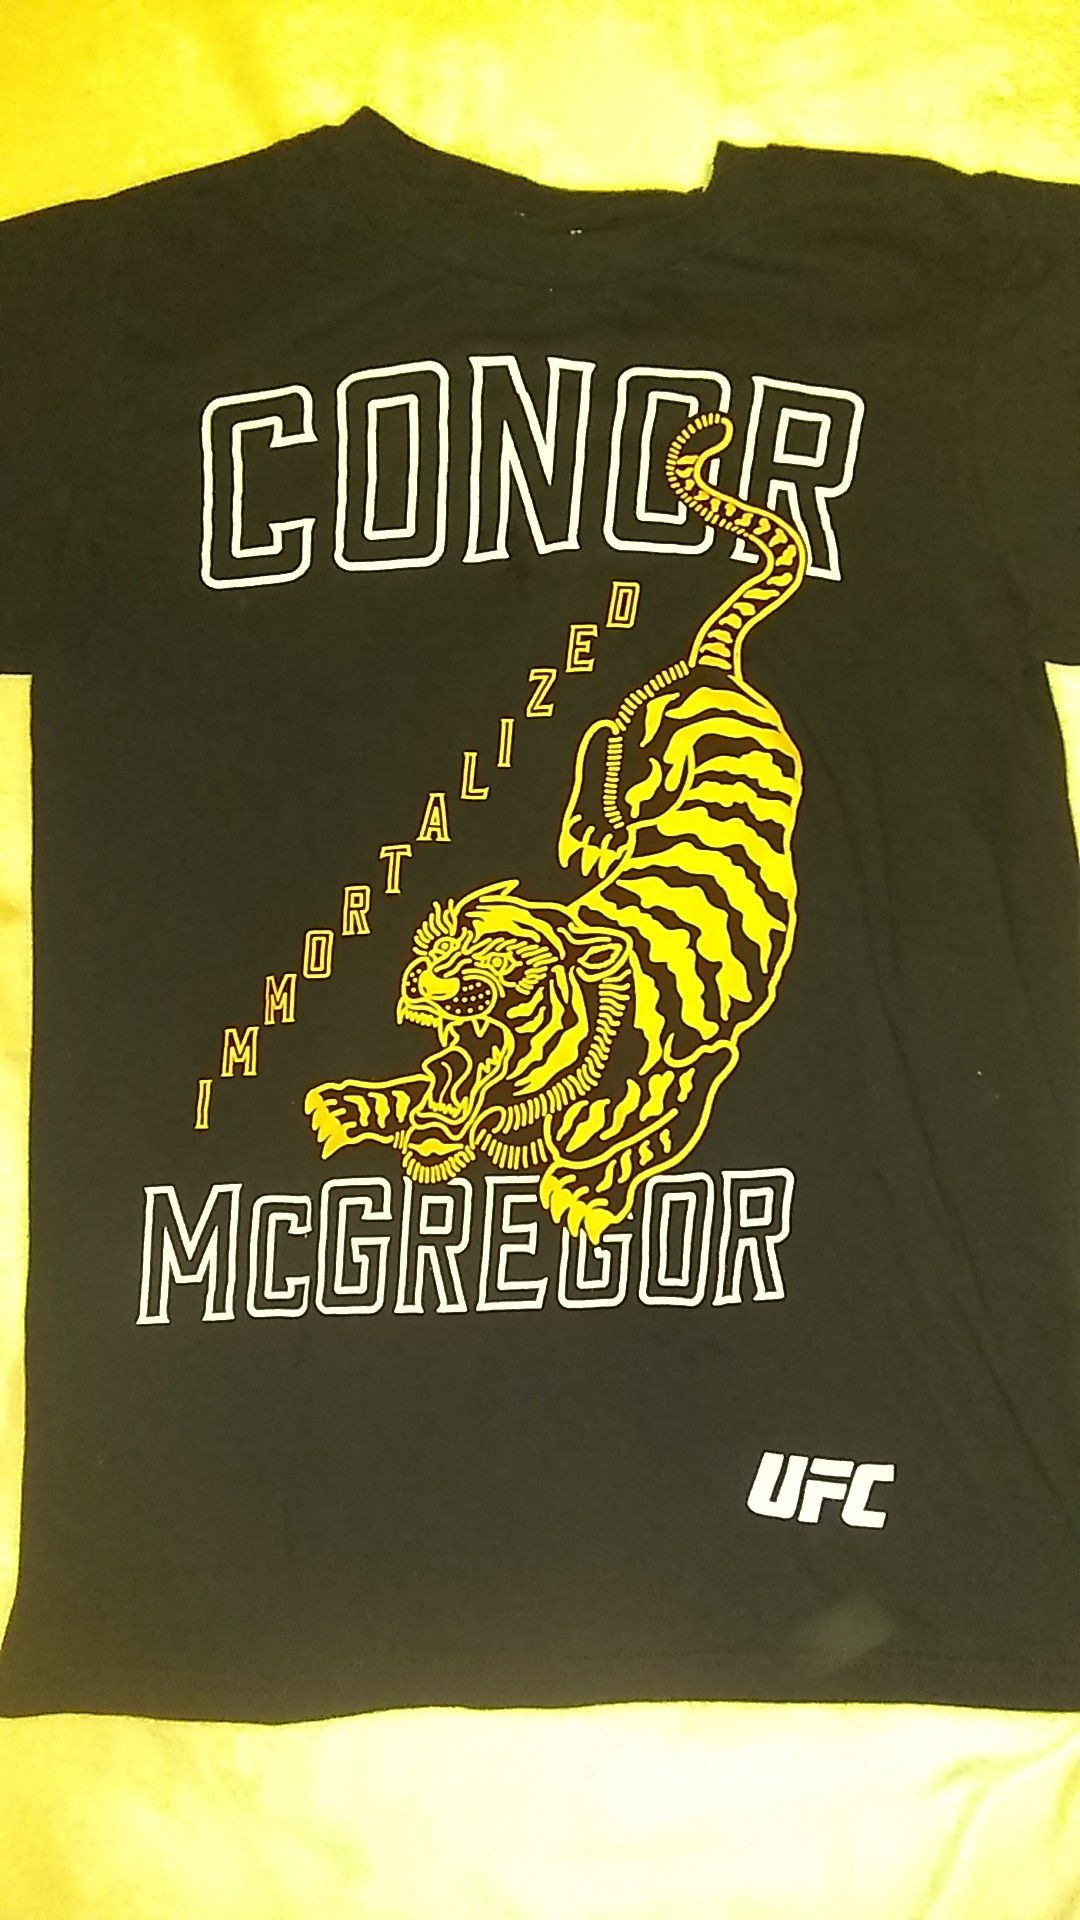 Conor McGregor t-shirt